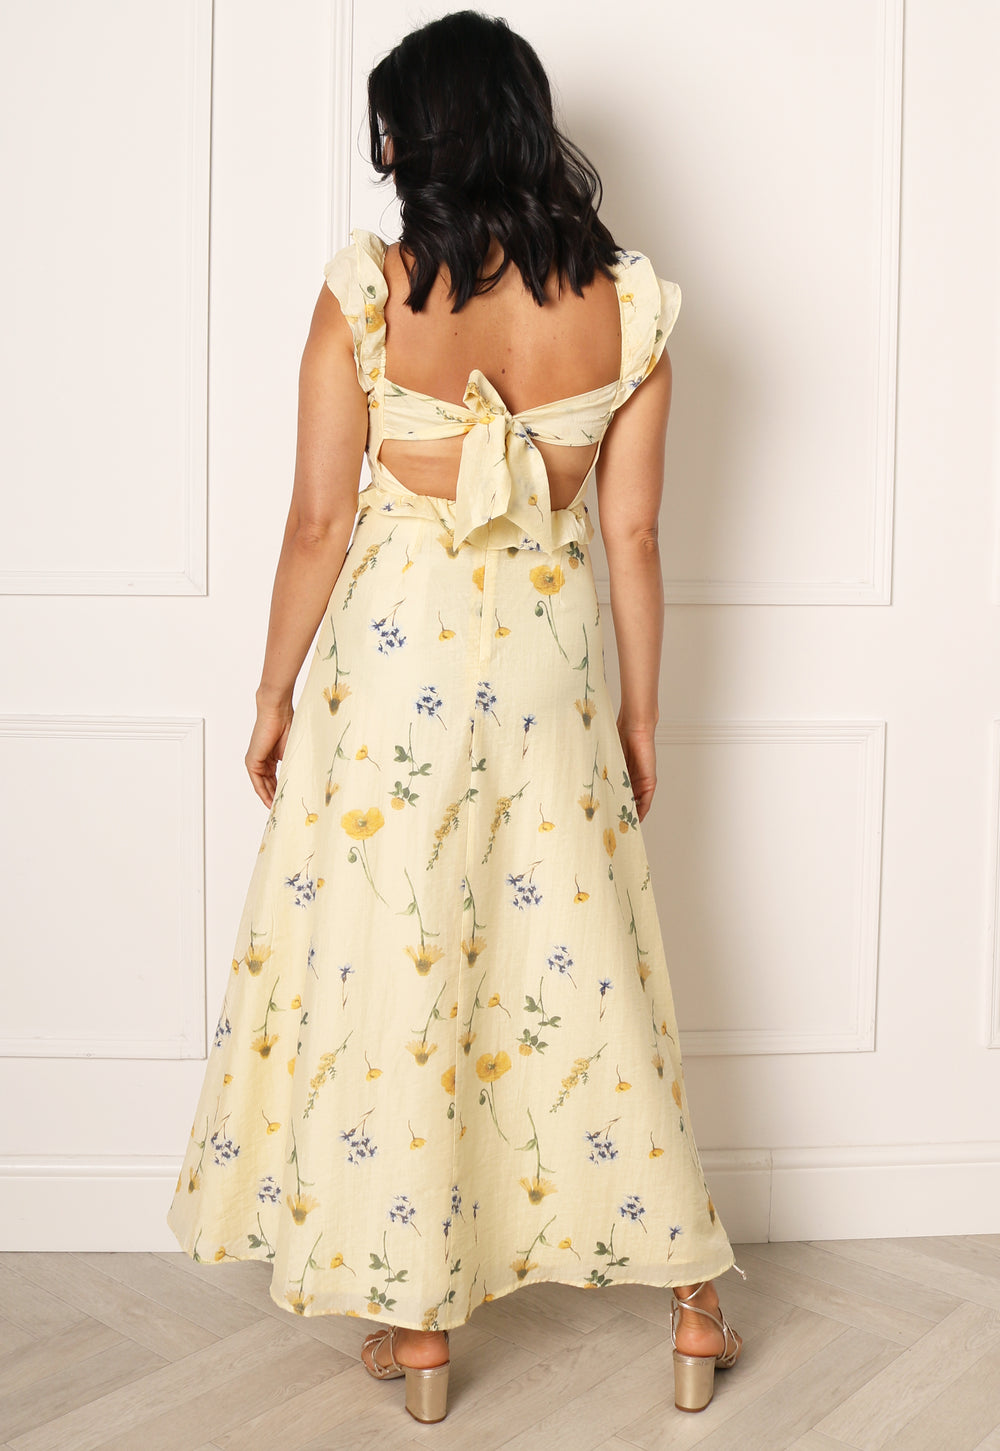 MODA Adeline Backless Floral Frill Detail Midi Dress in Lemon Yellow | One Clothing VERO MODA Backless Floral Frill Detail Midi in Lemon Yel